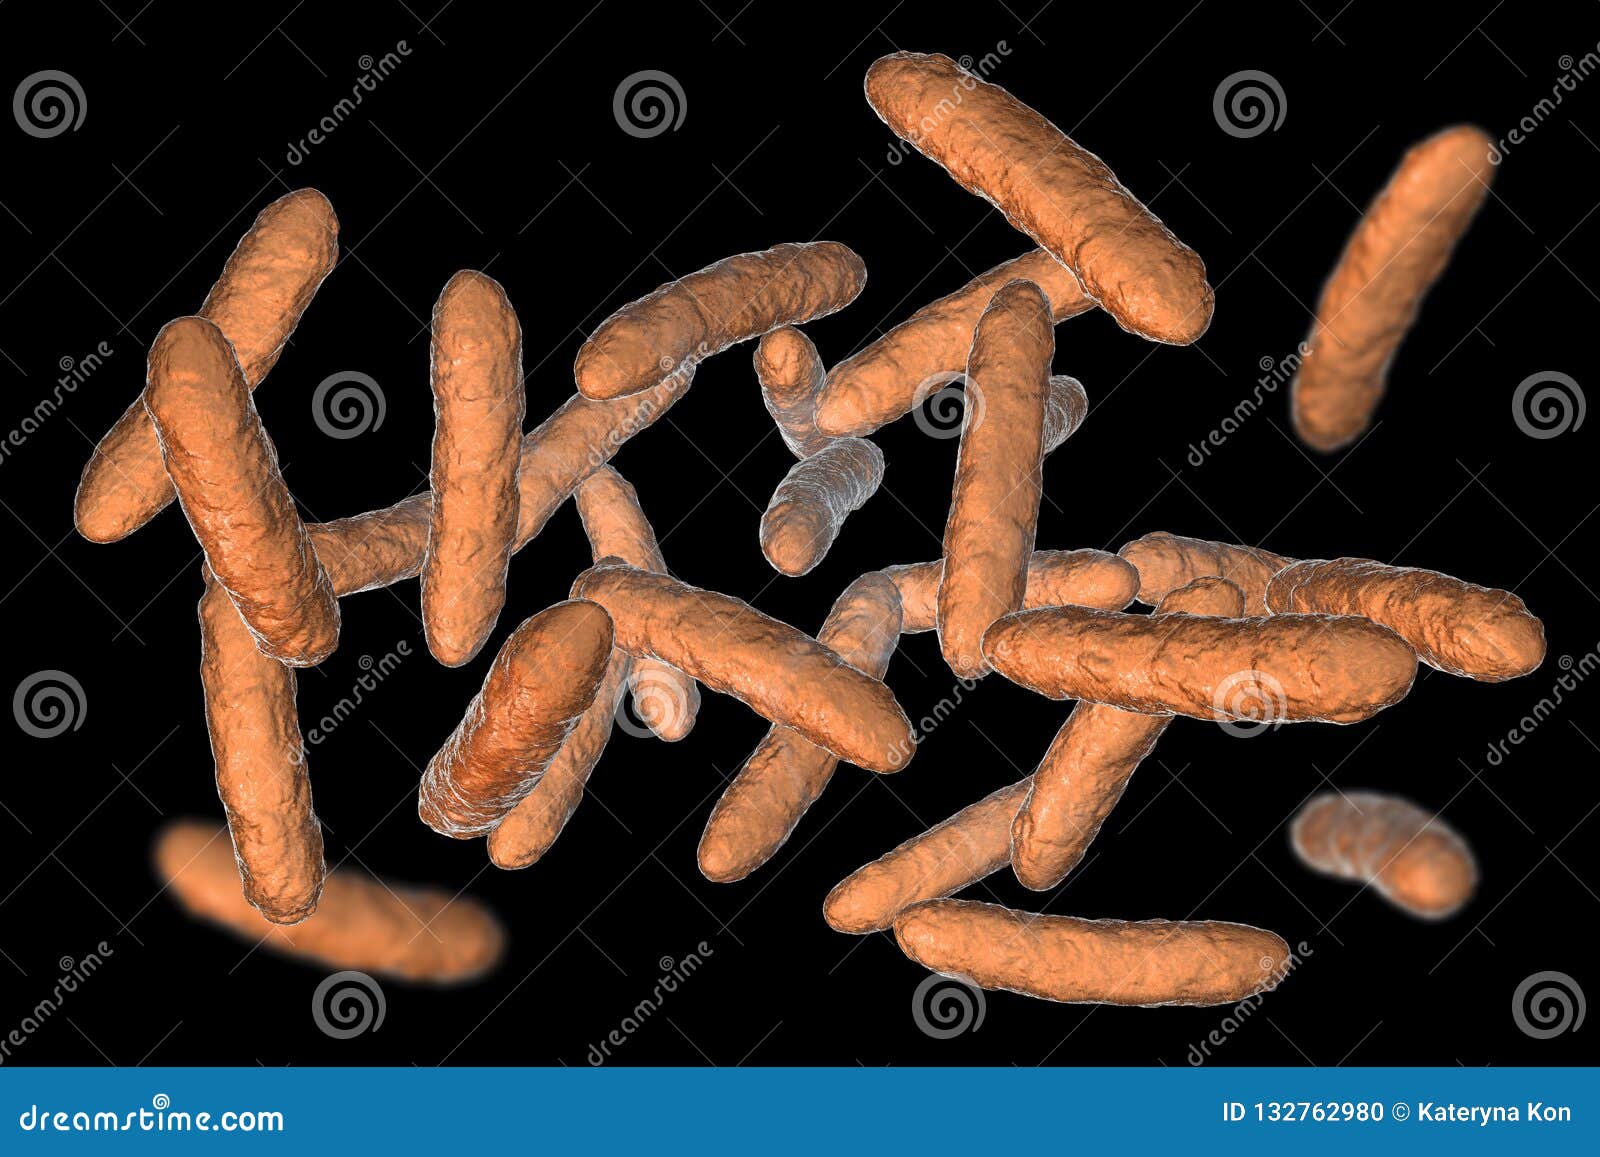 probiotic bacteria, normal intestinal microbiota